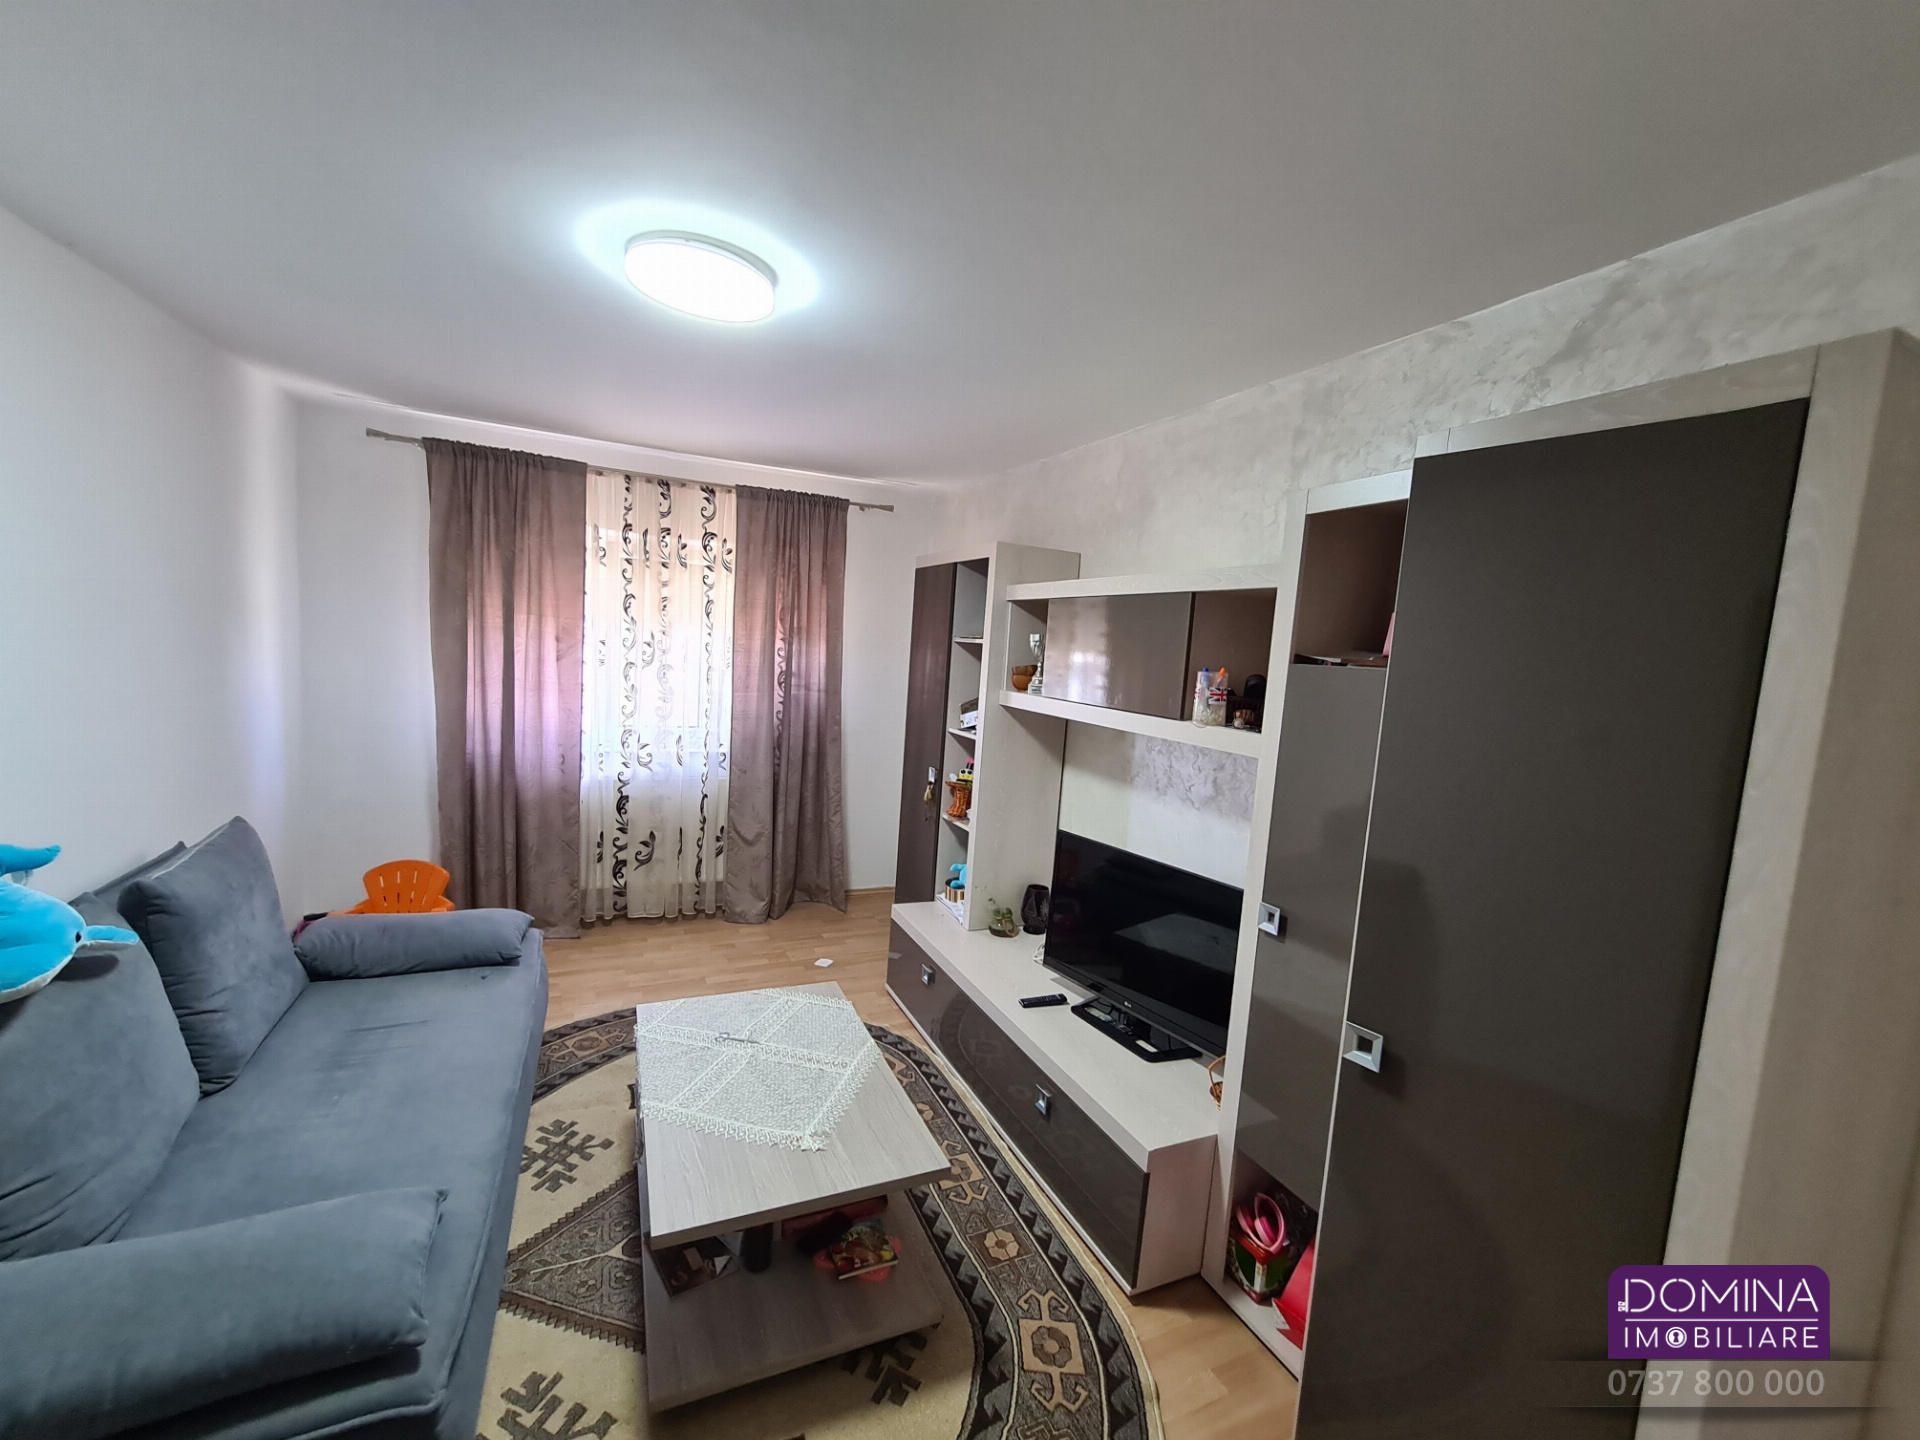 Vânzare apartament 3 camere situat în Târgu Jiu, strada Termocentralei - zona Mall